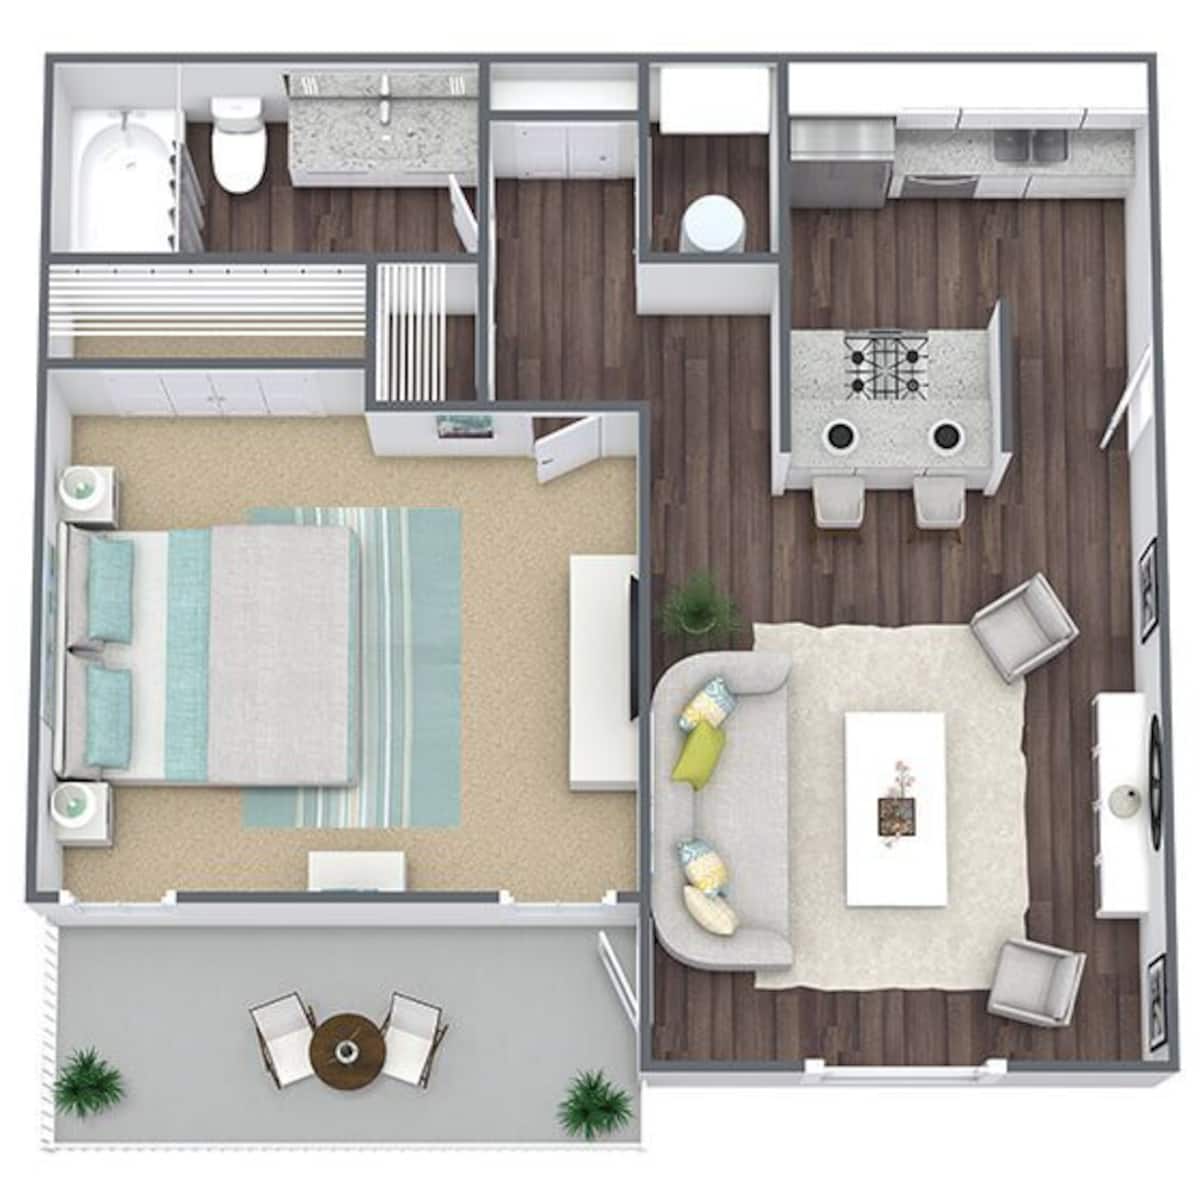 Floorplan diagram for A2 | Dogwood, showing 1 bedroom